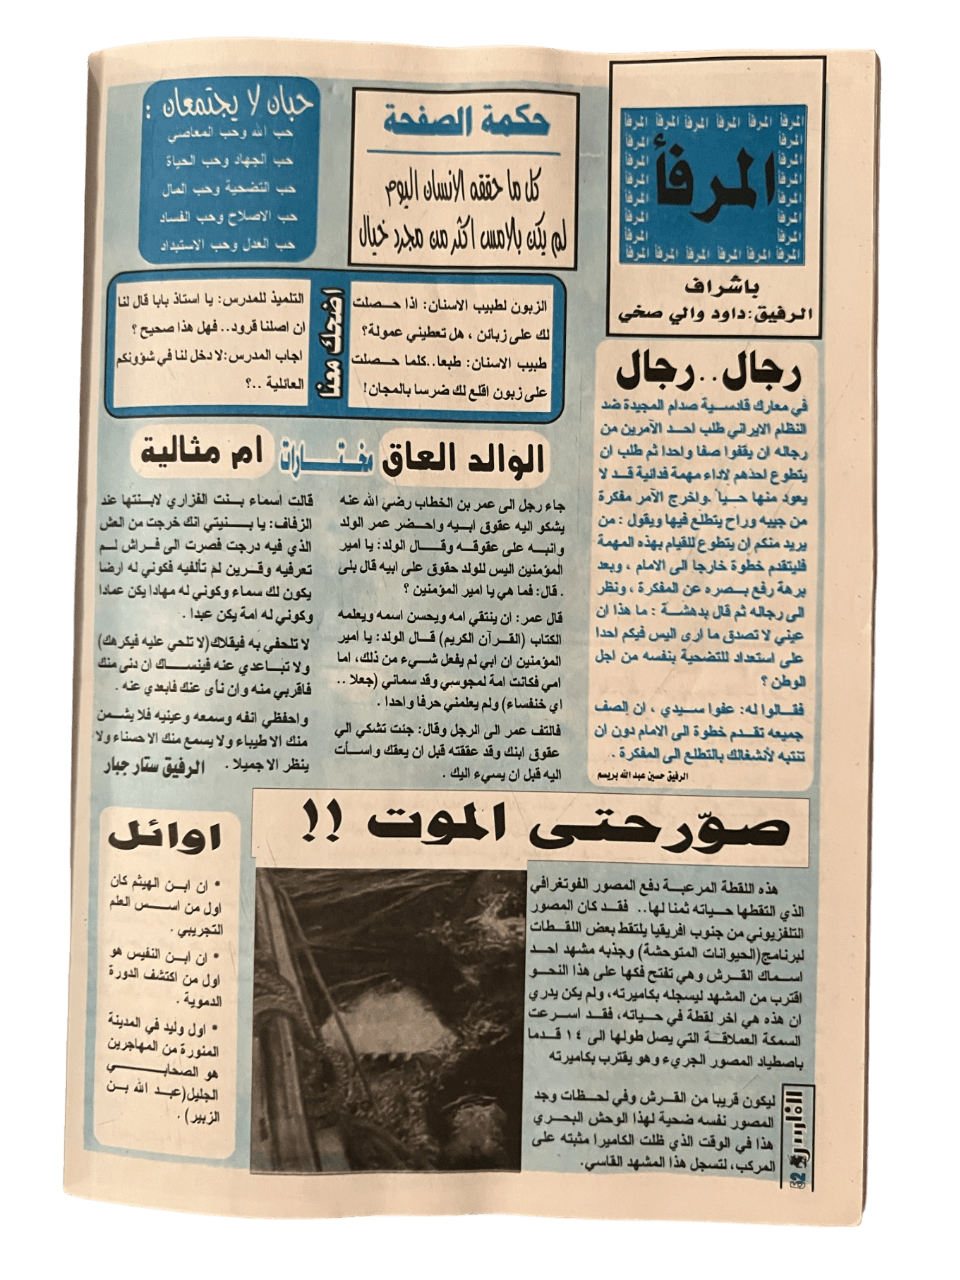 Al-Faris (The Knight), October 2002 - KHAJISTAN™